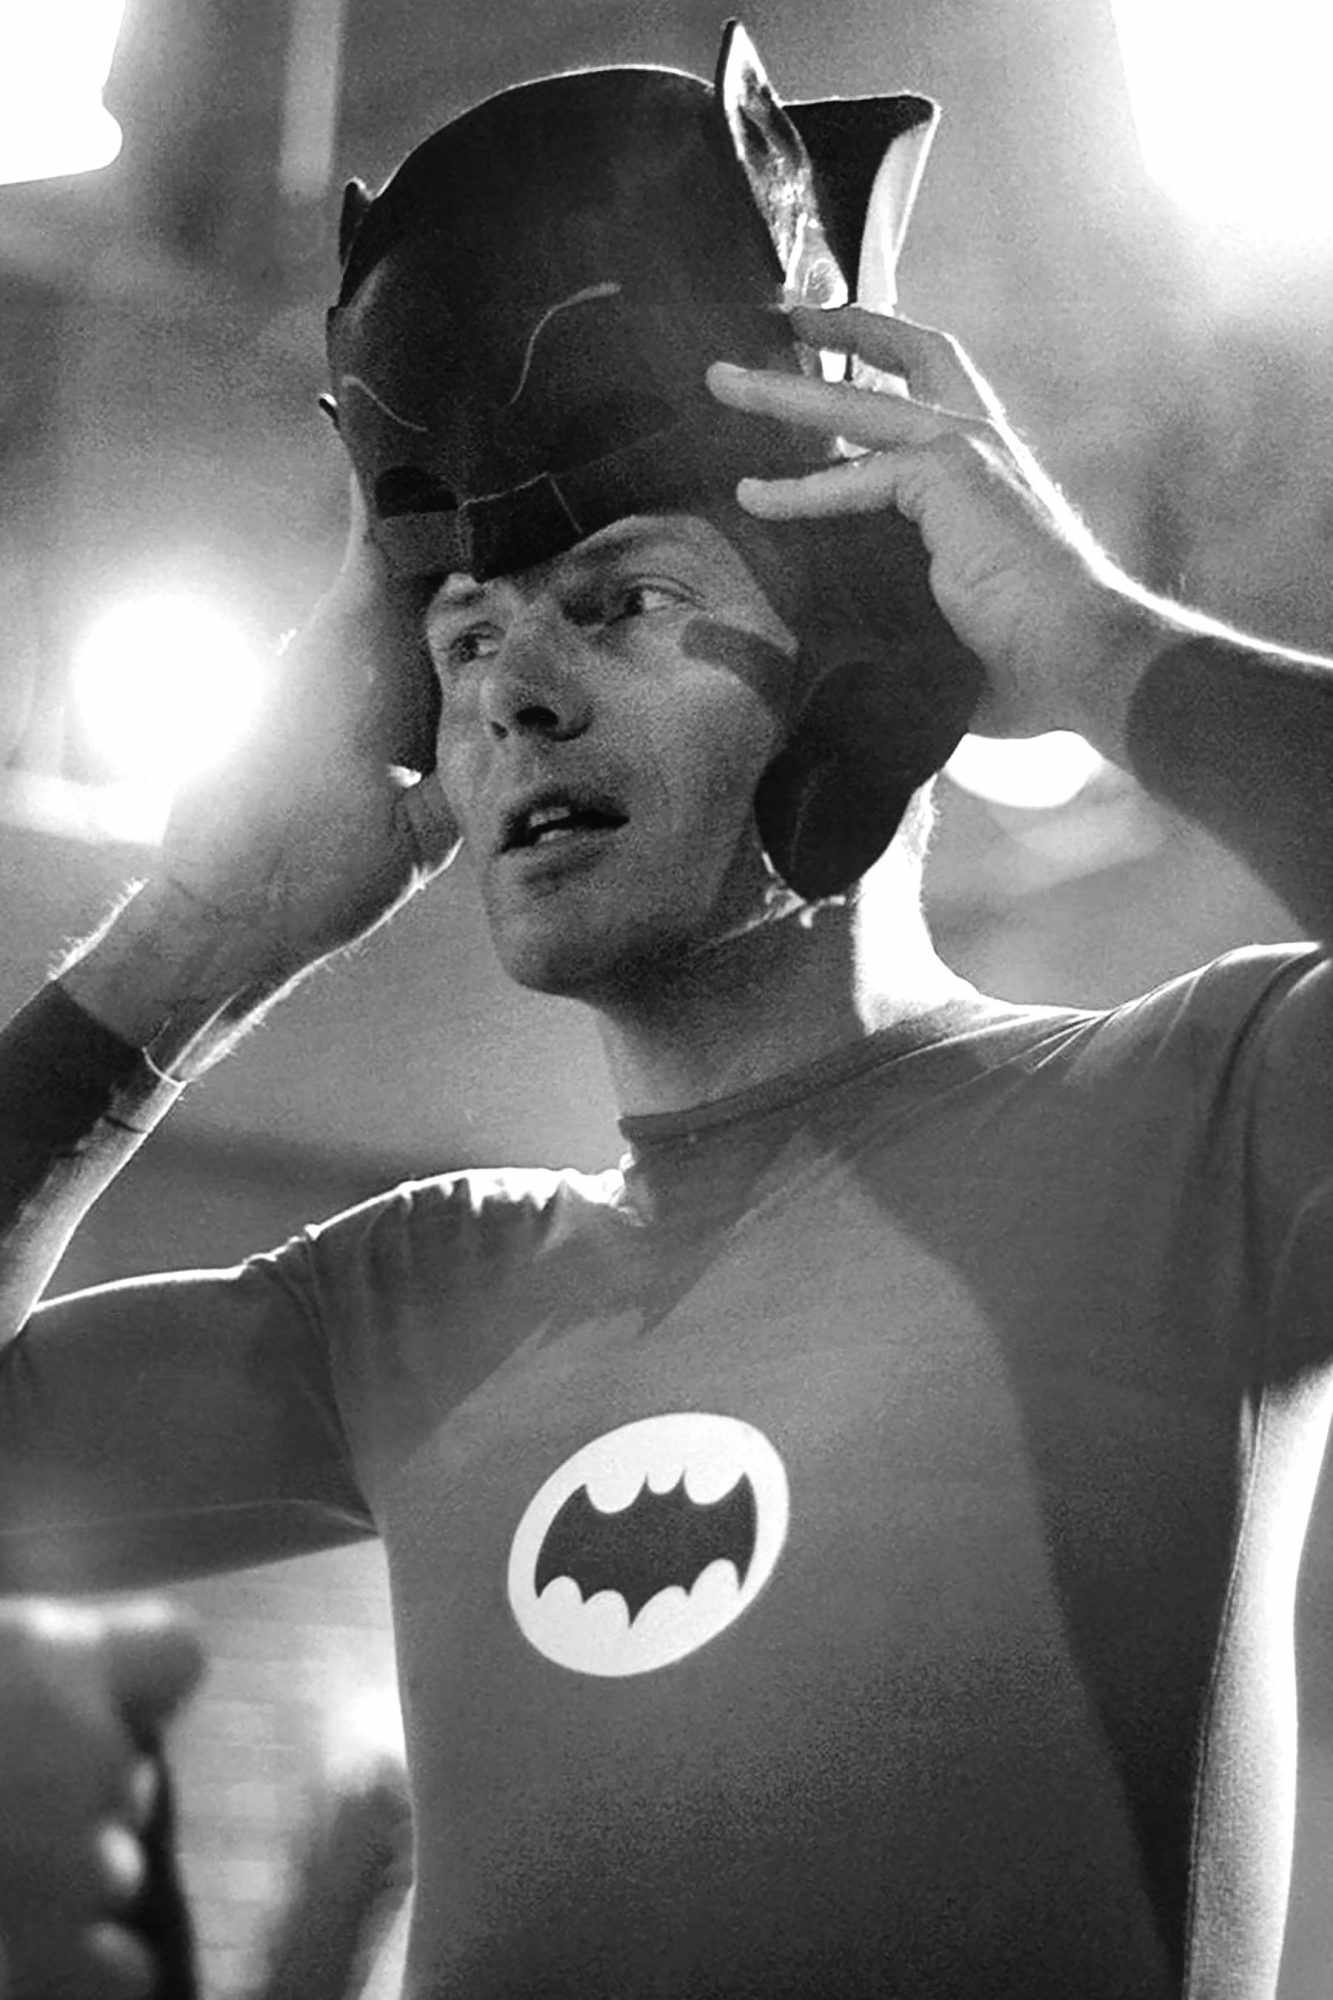 Adam West dead: Watch him reflect on Batman | EW.com